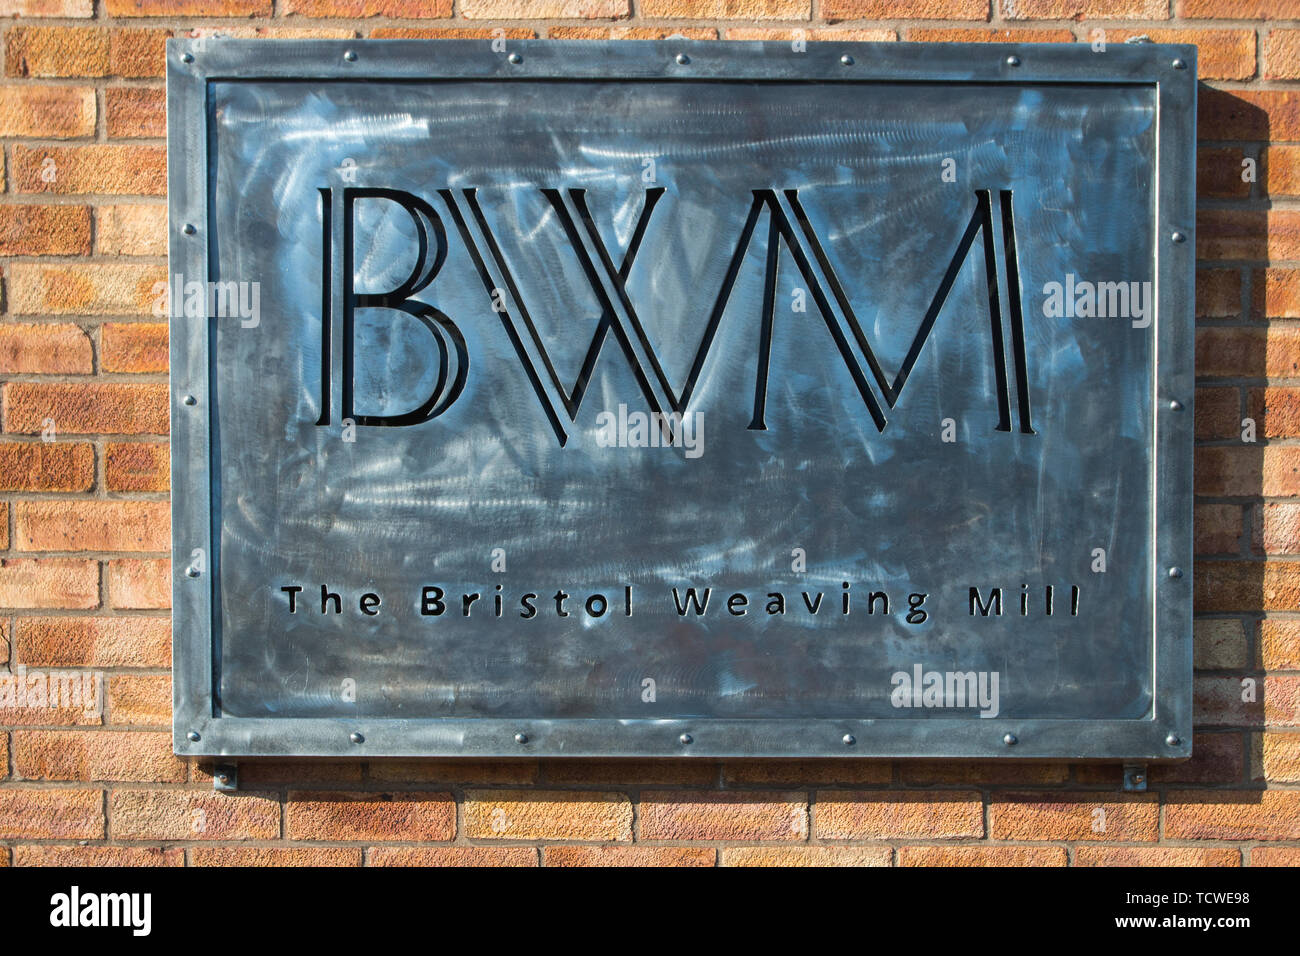 BRISTOL: The Bristol Weaving Mill Stock Photo